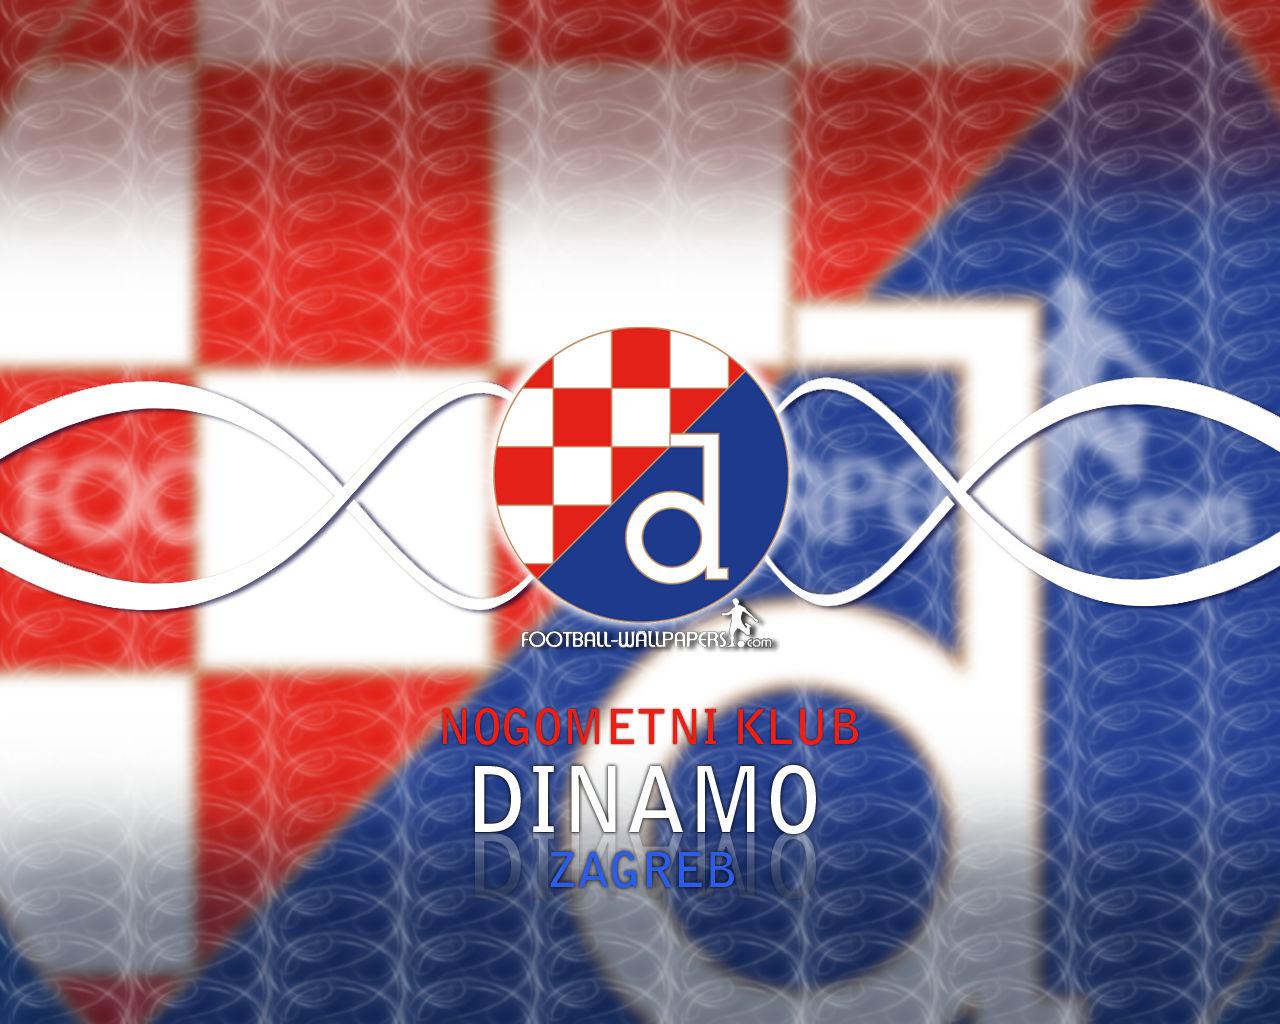 Dinamo Zagreb. Dinamo Zagreb Football Wallpaper